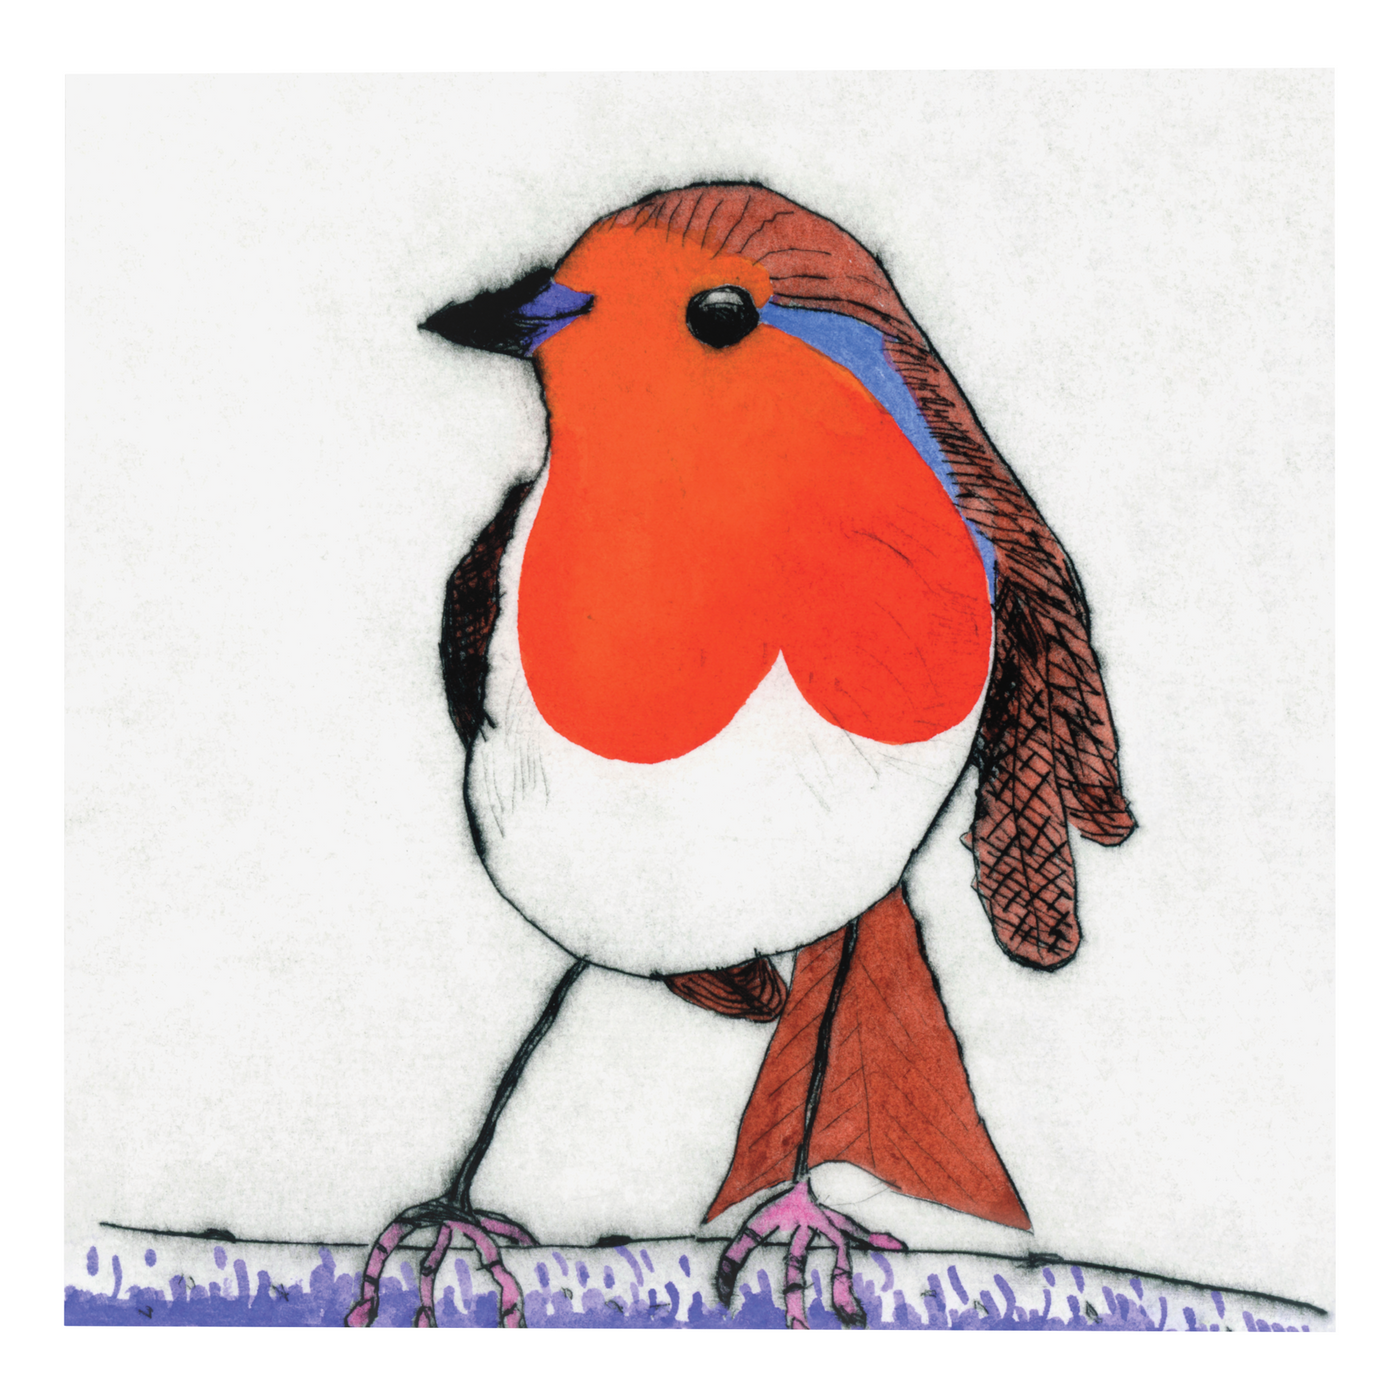 Zero Plastic | Richard Spare - 'Dapper Robin' - Plastic-Negative Art Greetings Card (15 x 15 cm)